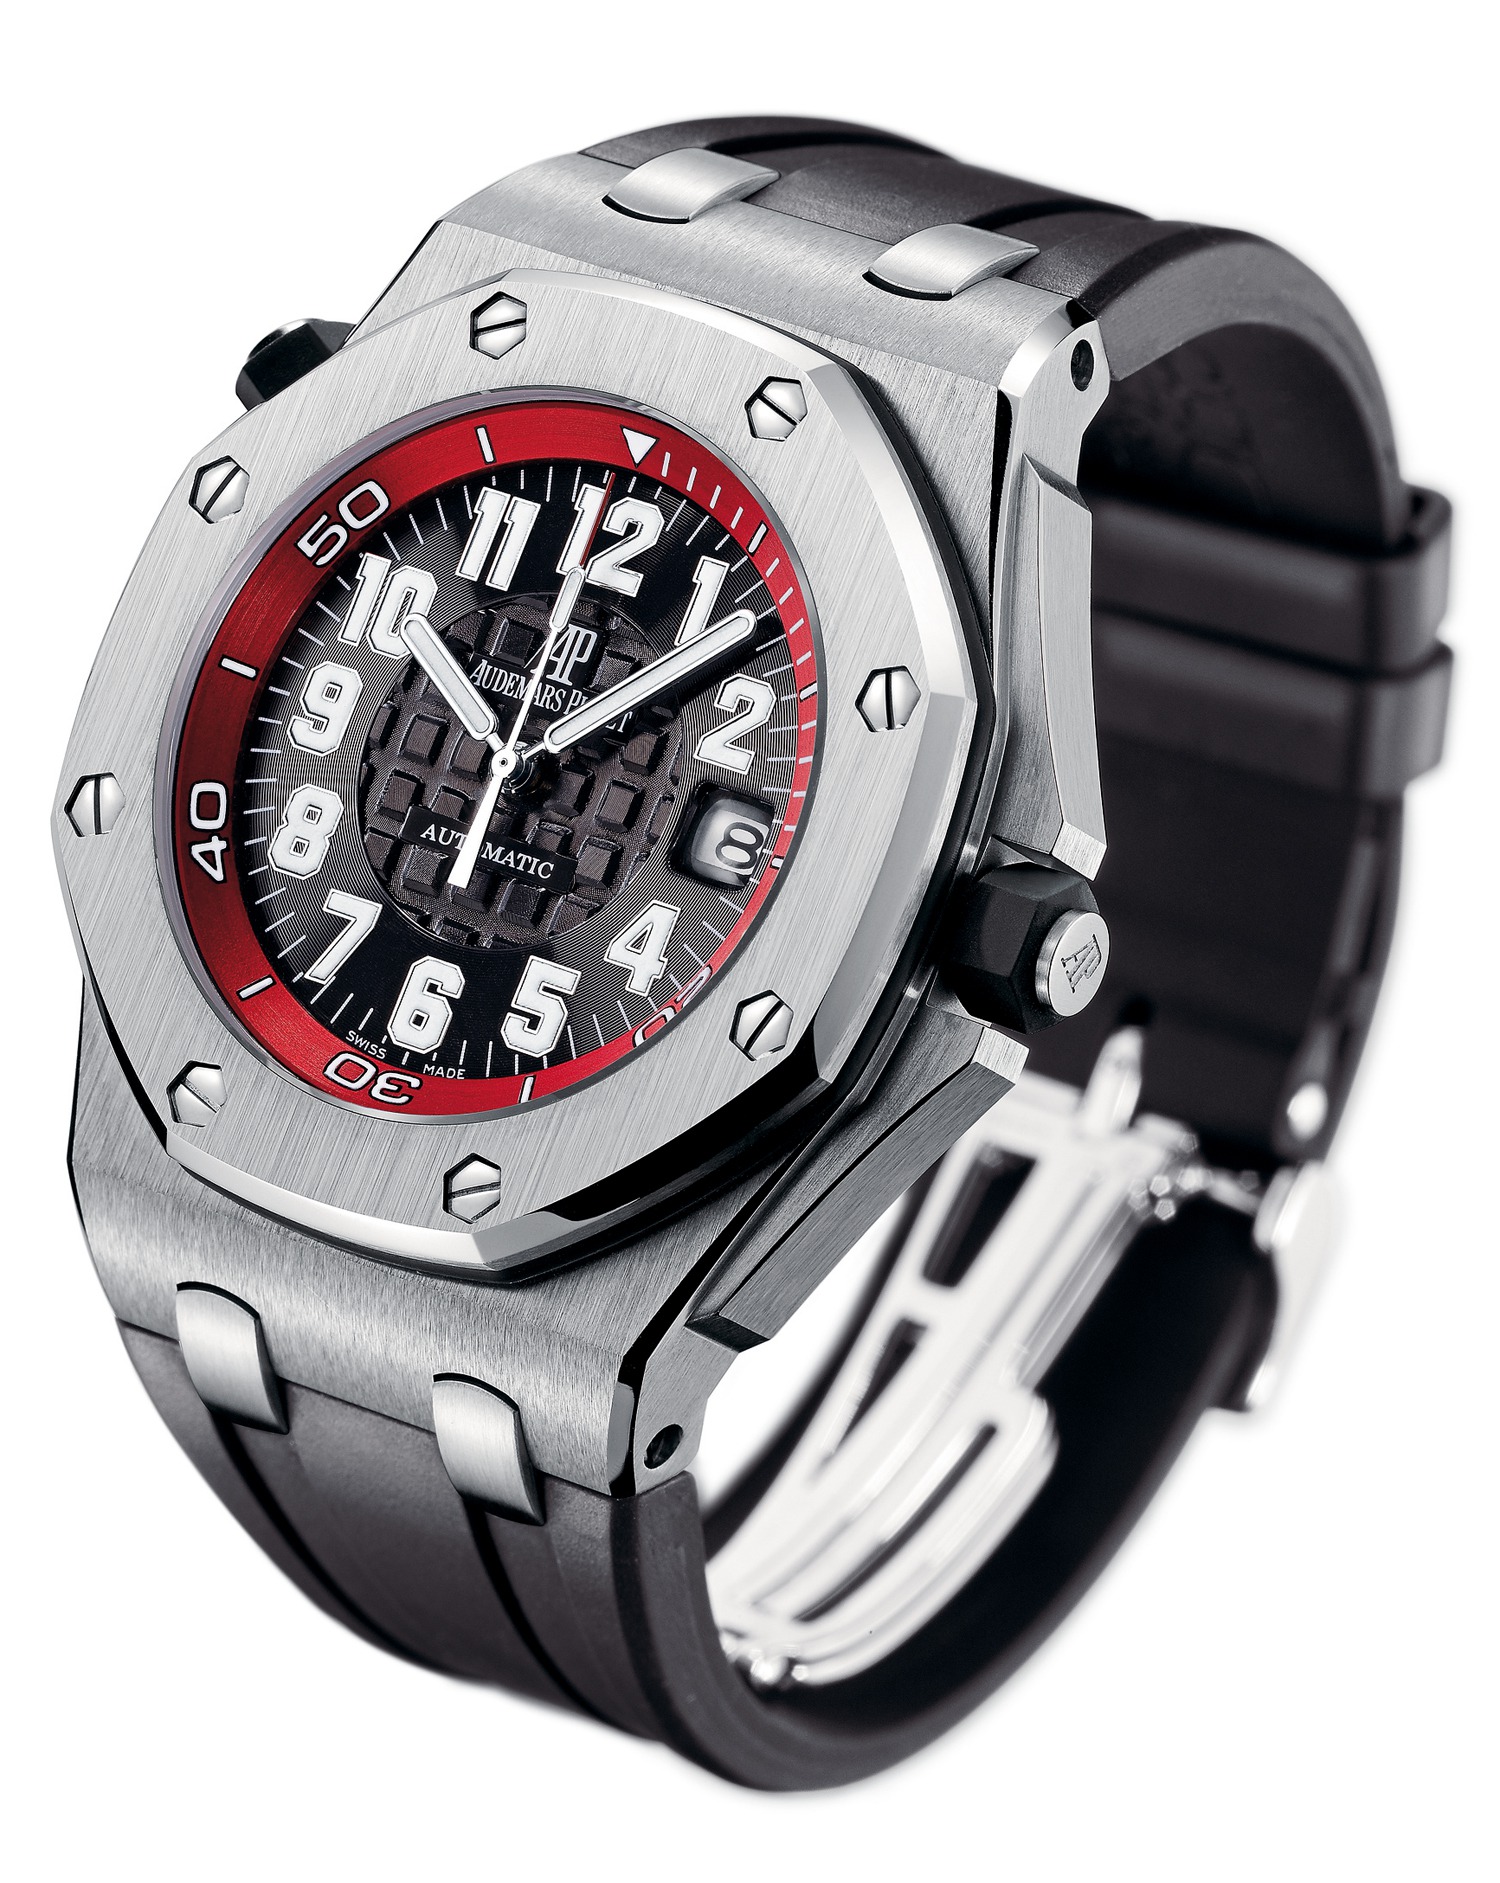 Audemars Piguet Royal Oak Offshore Scuba Boutique Red Steel watch REF: 15701ST.OO.D002CA.03